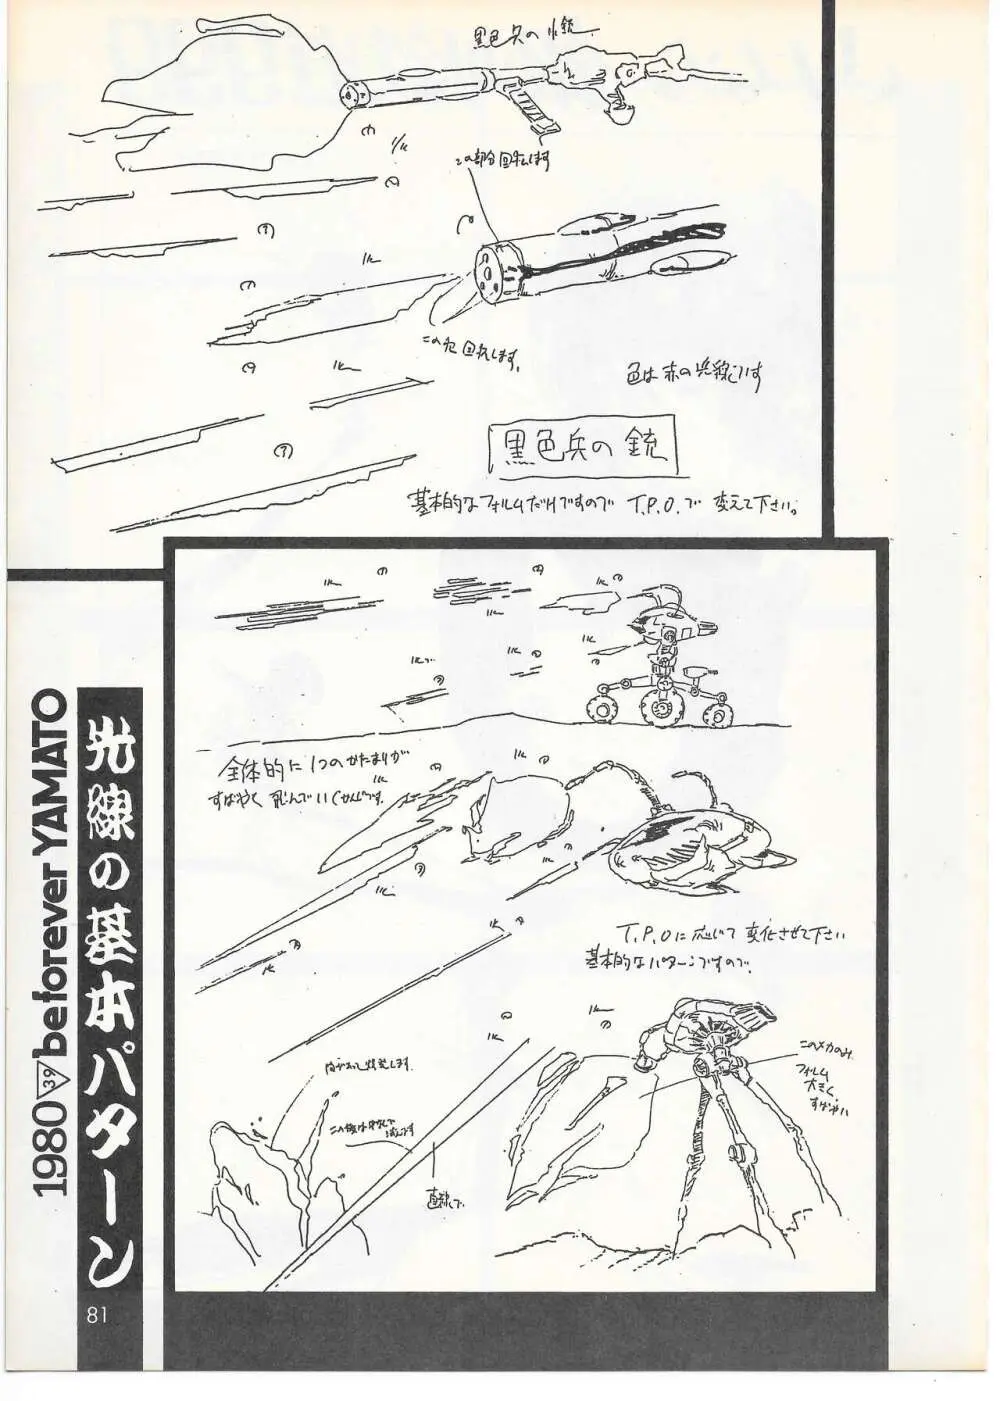 THE ANIMATOR 1 金田伊功特集号 - page78